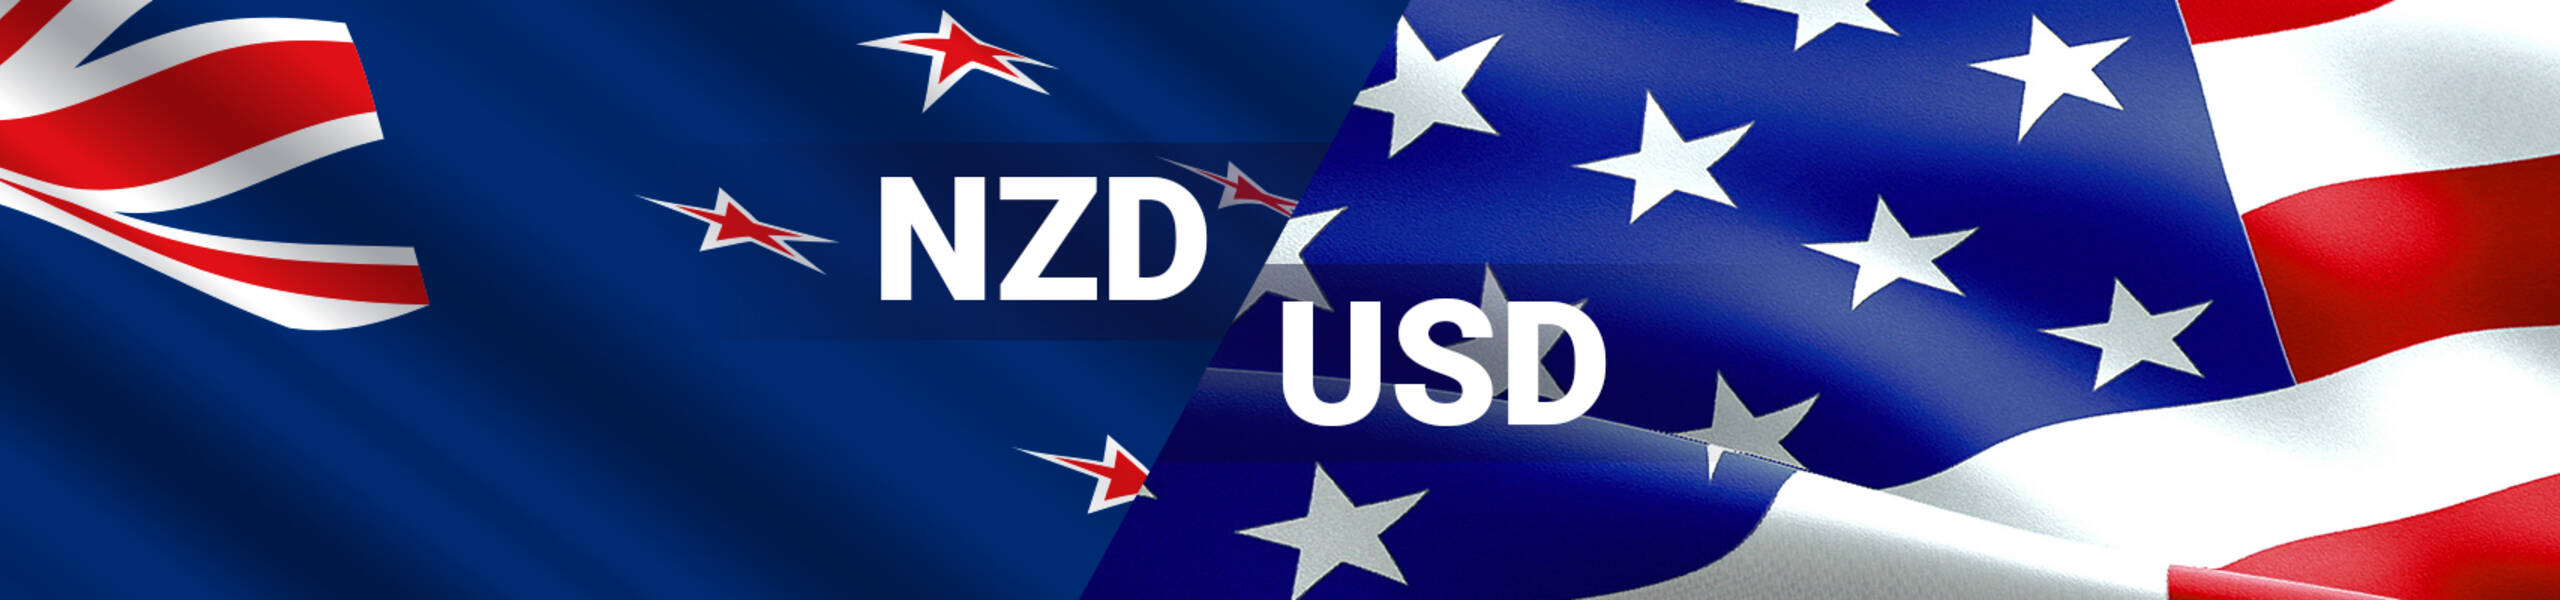 NZD/USD: kiwi wants to rise higher